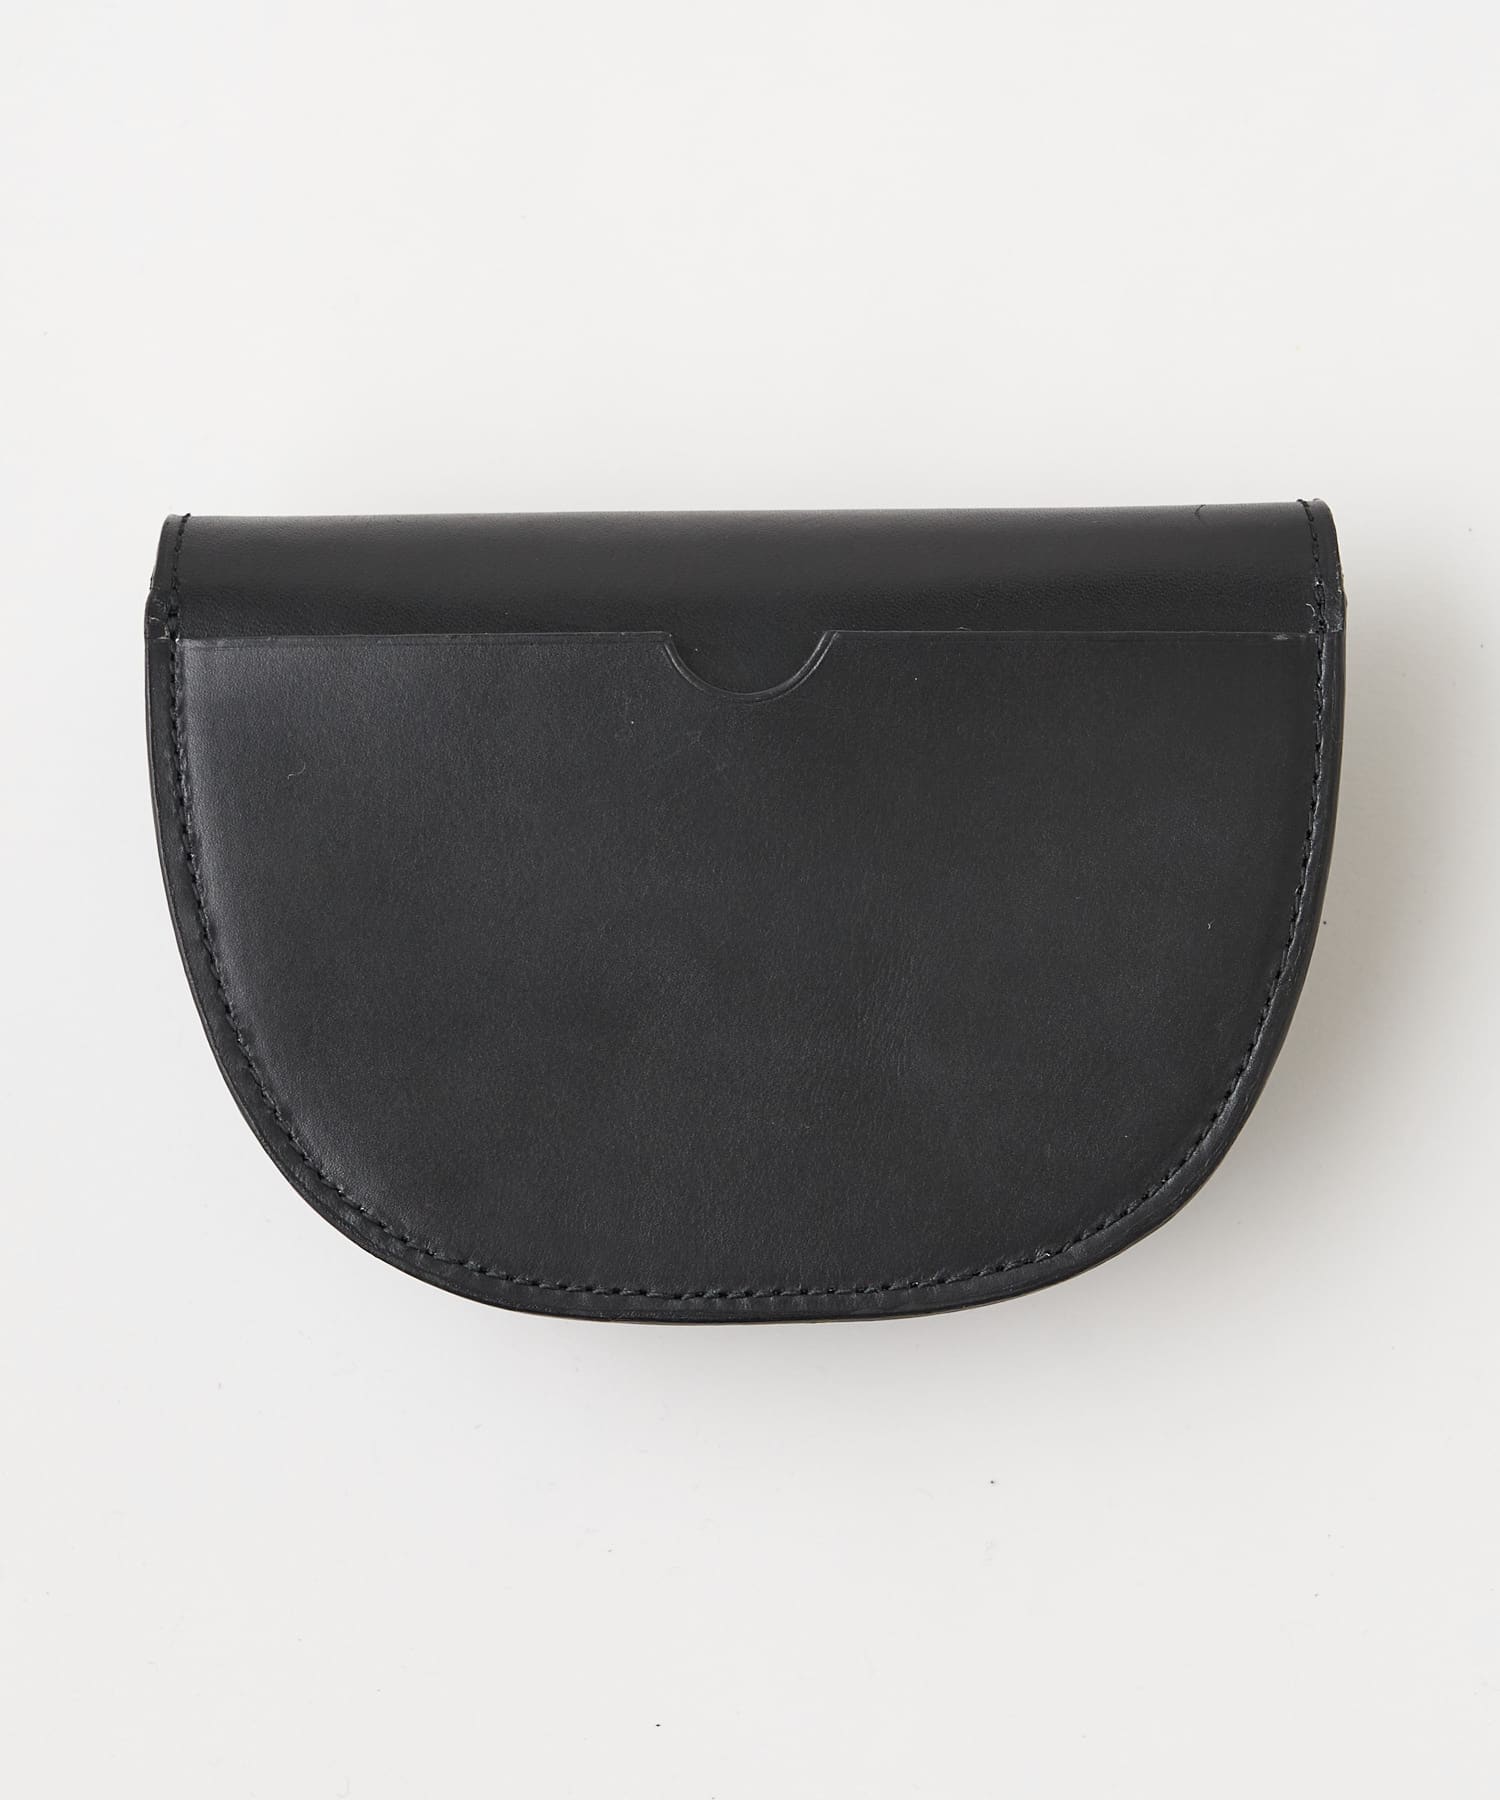 BLOOM&BRANCH(ブルームアンドブランチ) KAPTAIN SUNSHINE / Wallet Bag Calf